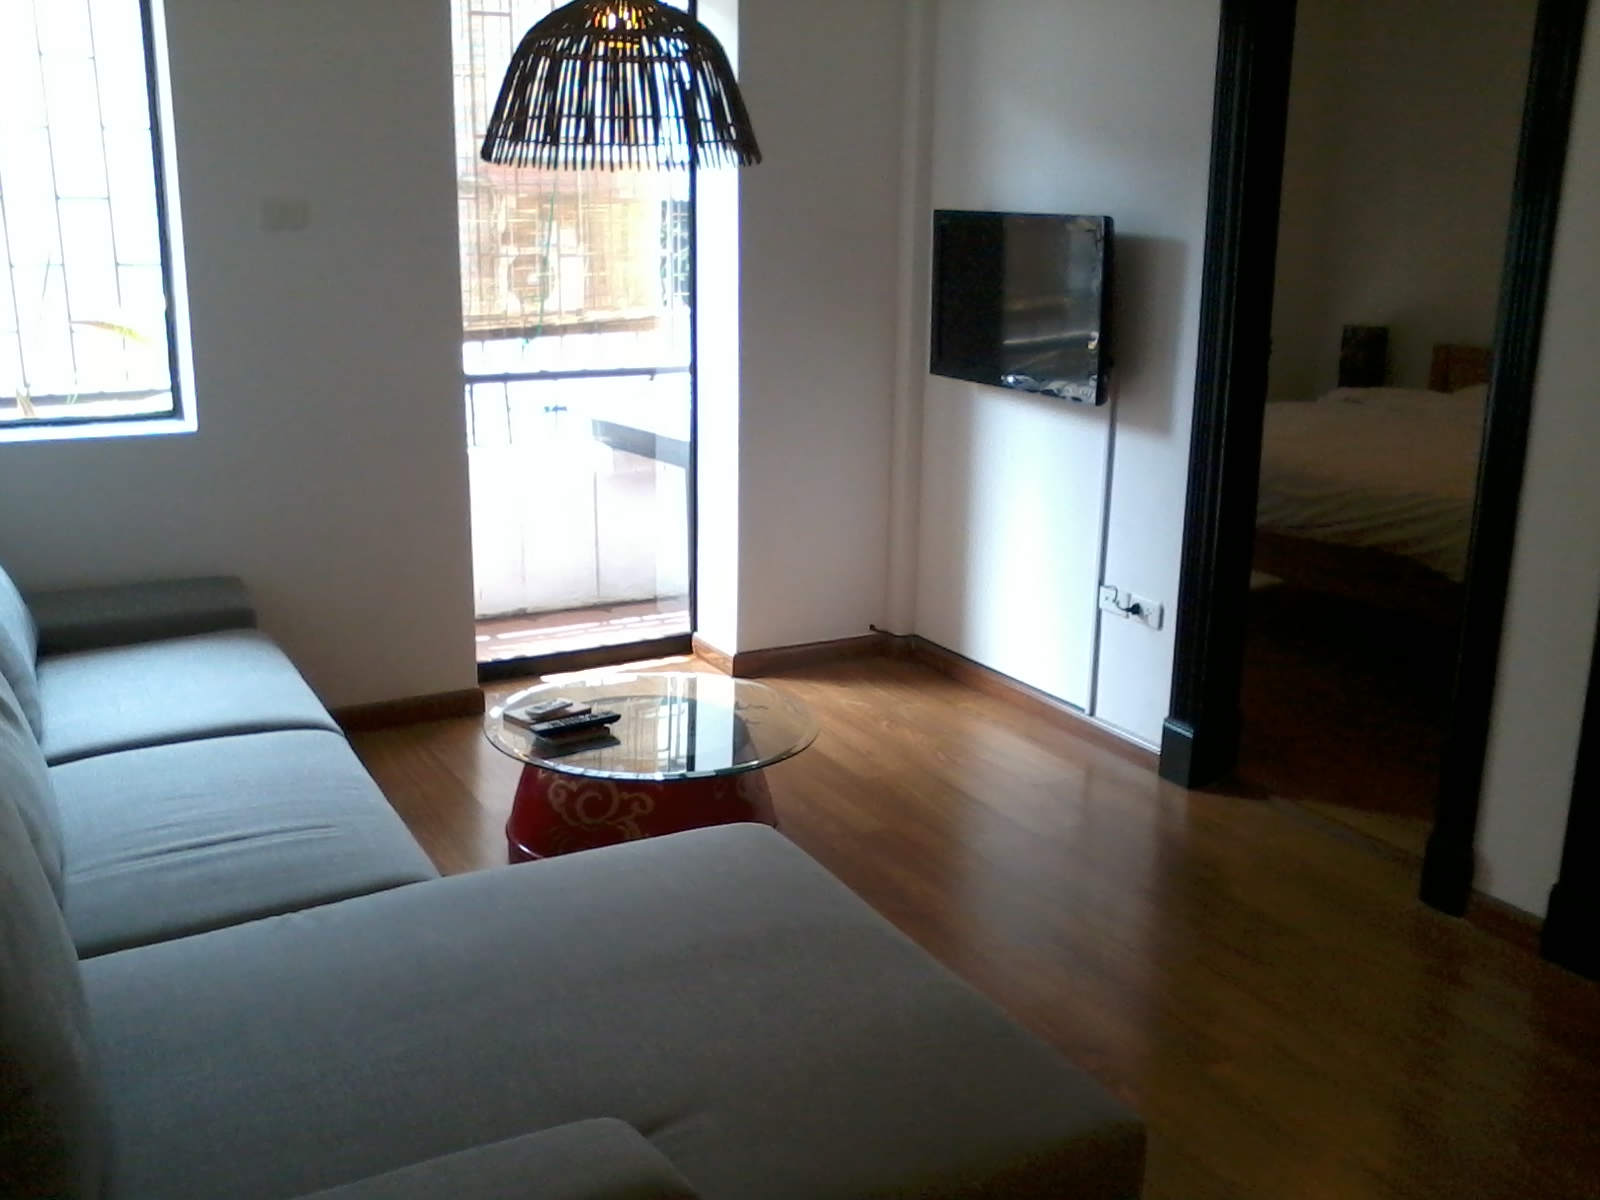 Living room2